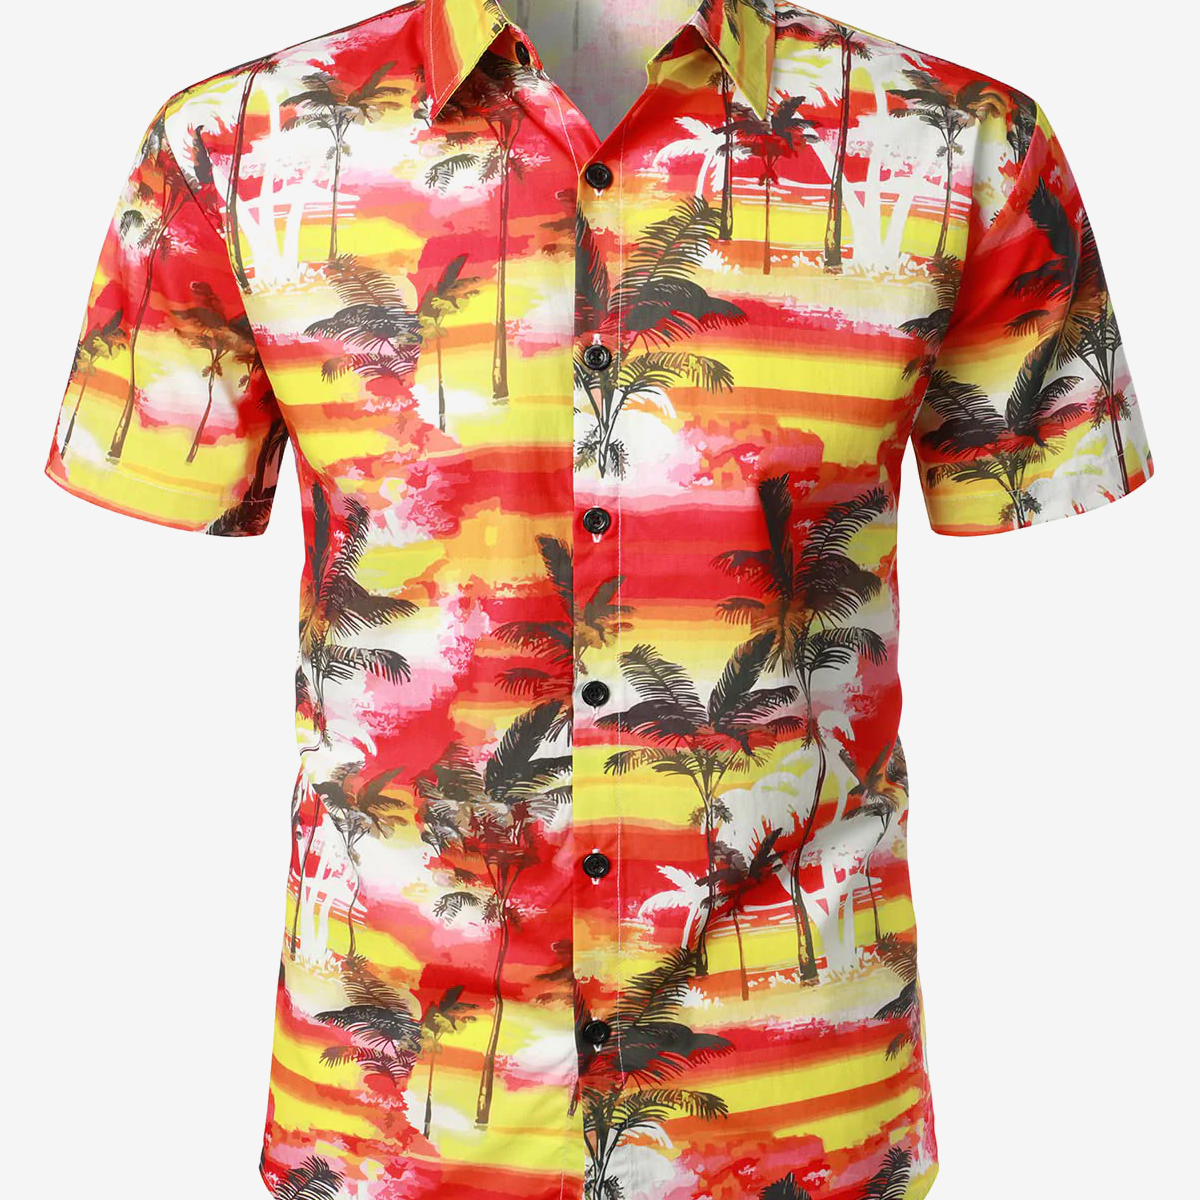 Men's Cotton Red Hawaiian Holiday Tropical Palm Tree Floral Short Sleeve Beach Button Shirt